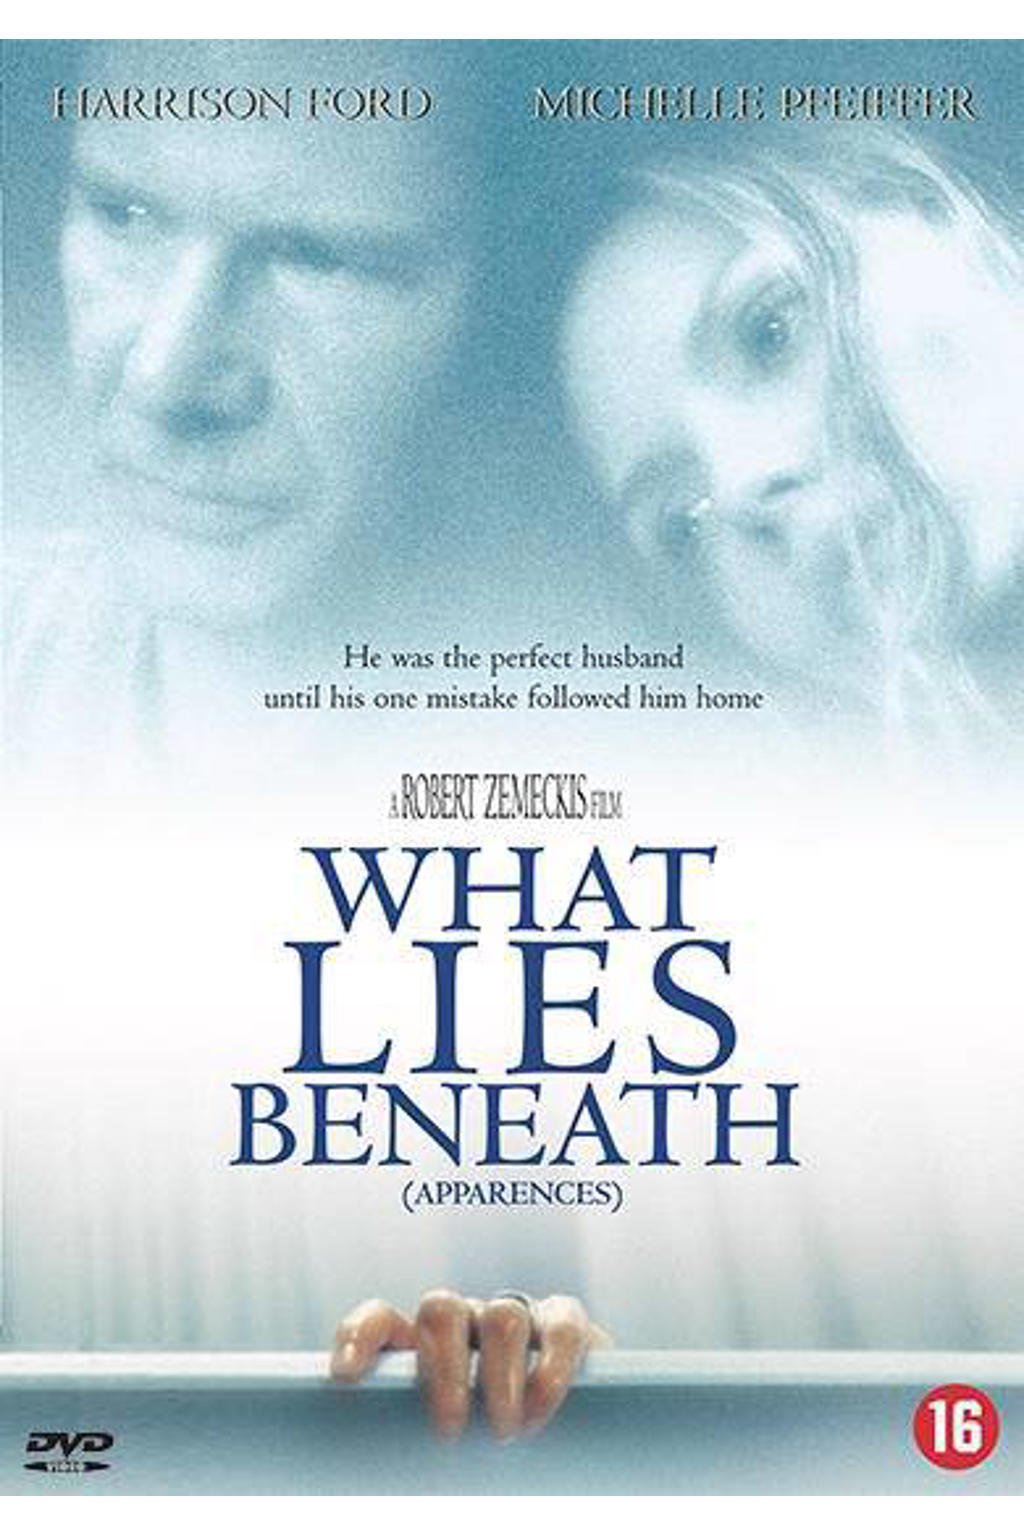 What lies beneath (DVD) wehkamp